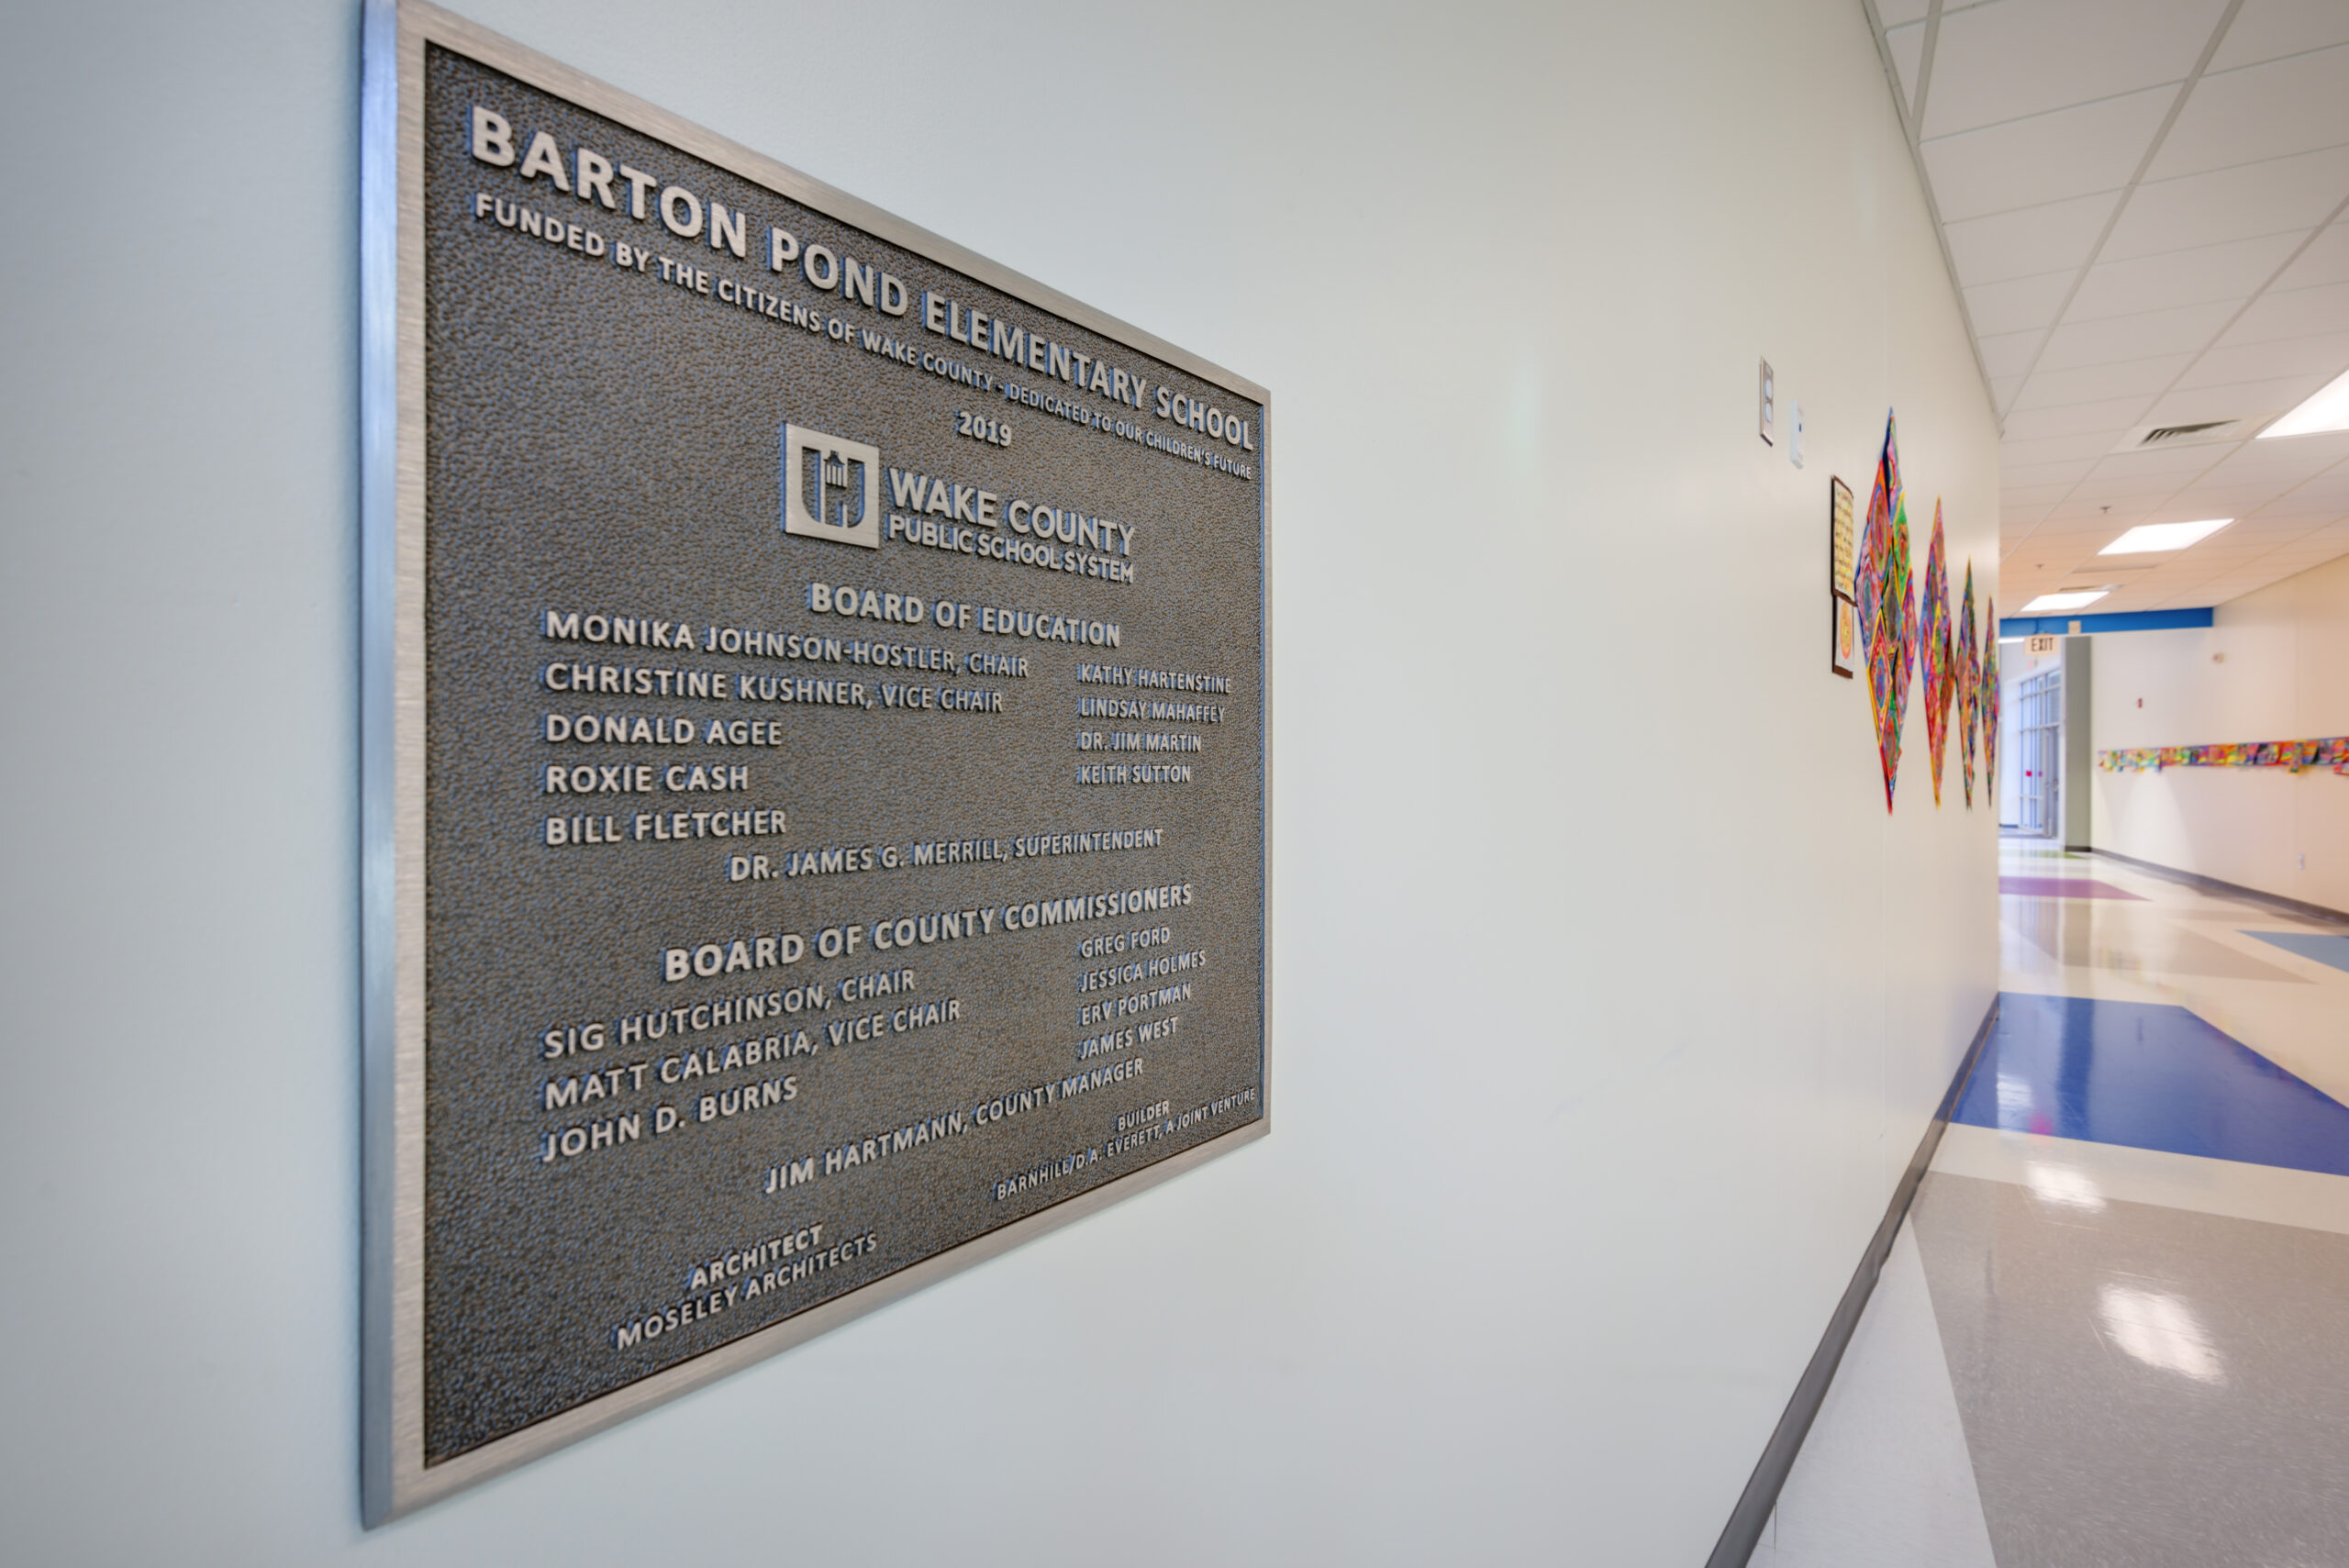 Barton Pond Elementary School Dedication Plaque Featuring Wake County Board of Education Members